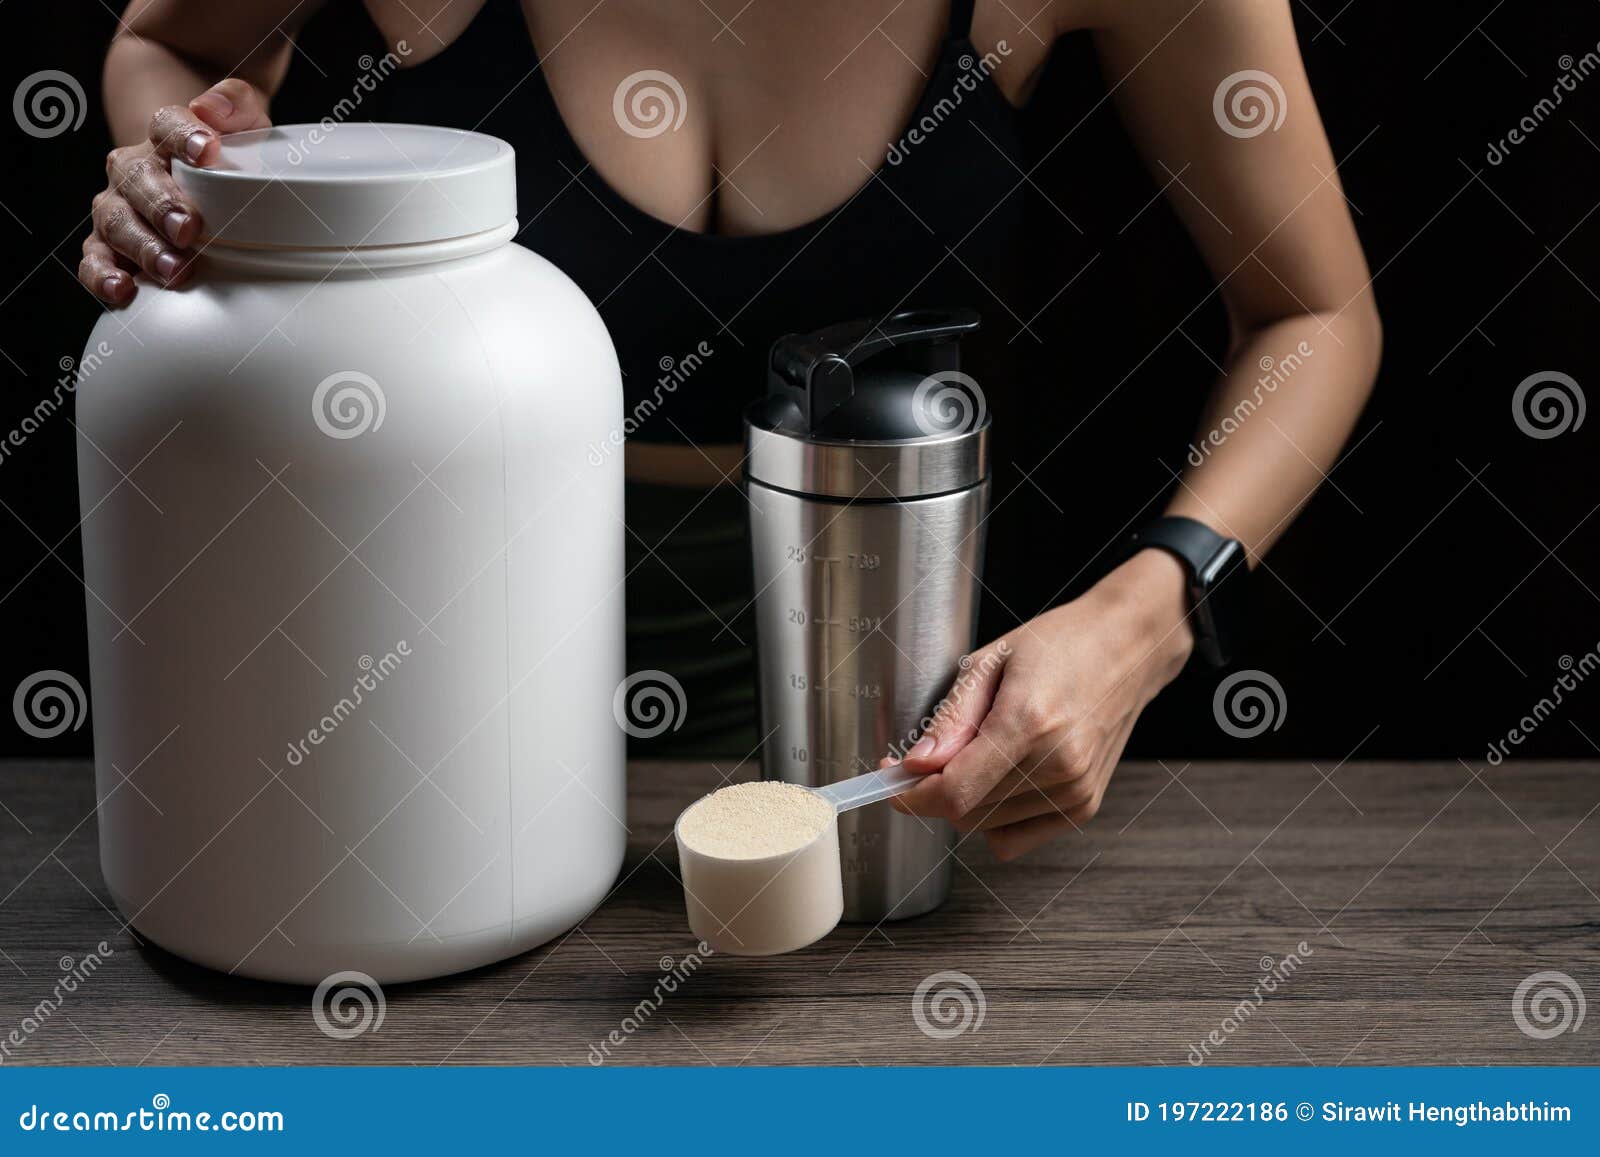 https://thumbs.dreamstime.com/z/close-up-women-measuring-scoop-whey-protein-jar-shaker-bottle-preparing-protein-shake-close-up-women-197222186.jpg